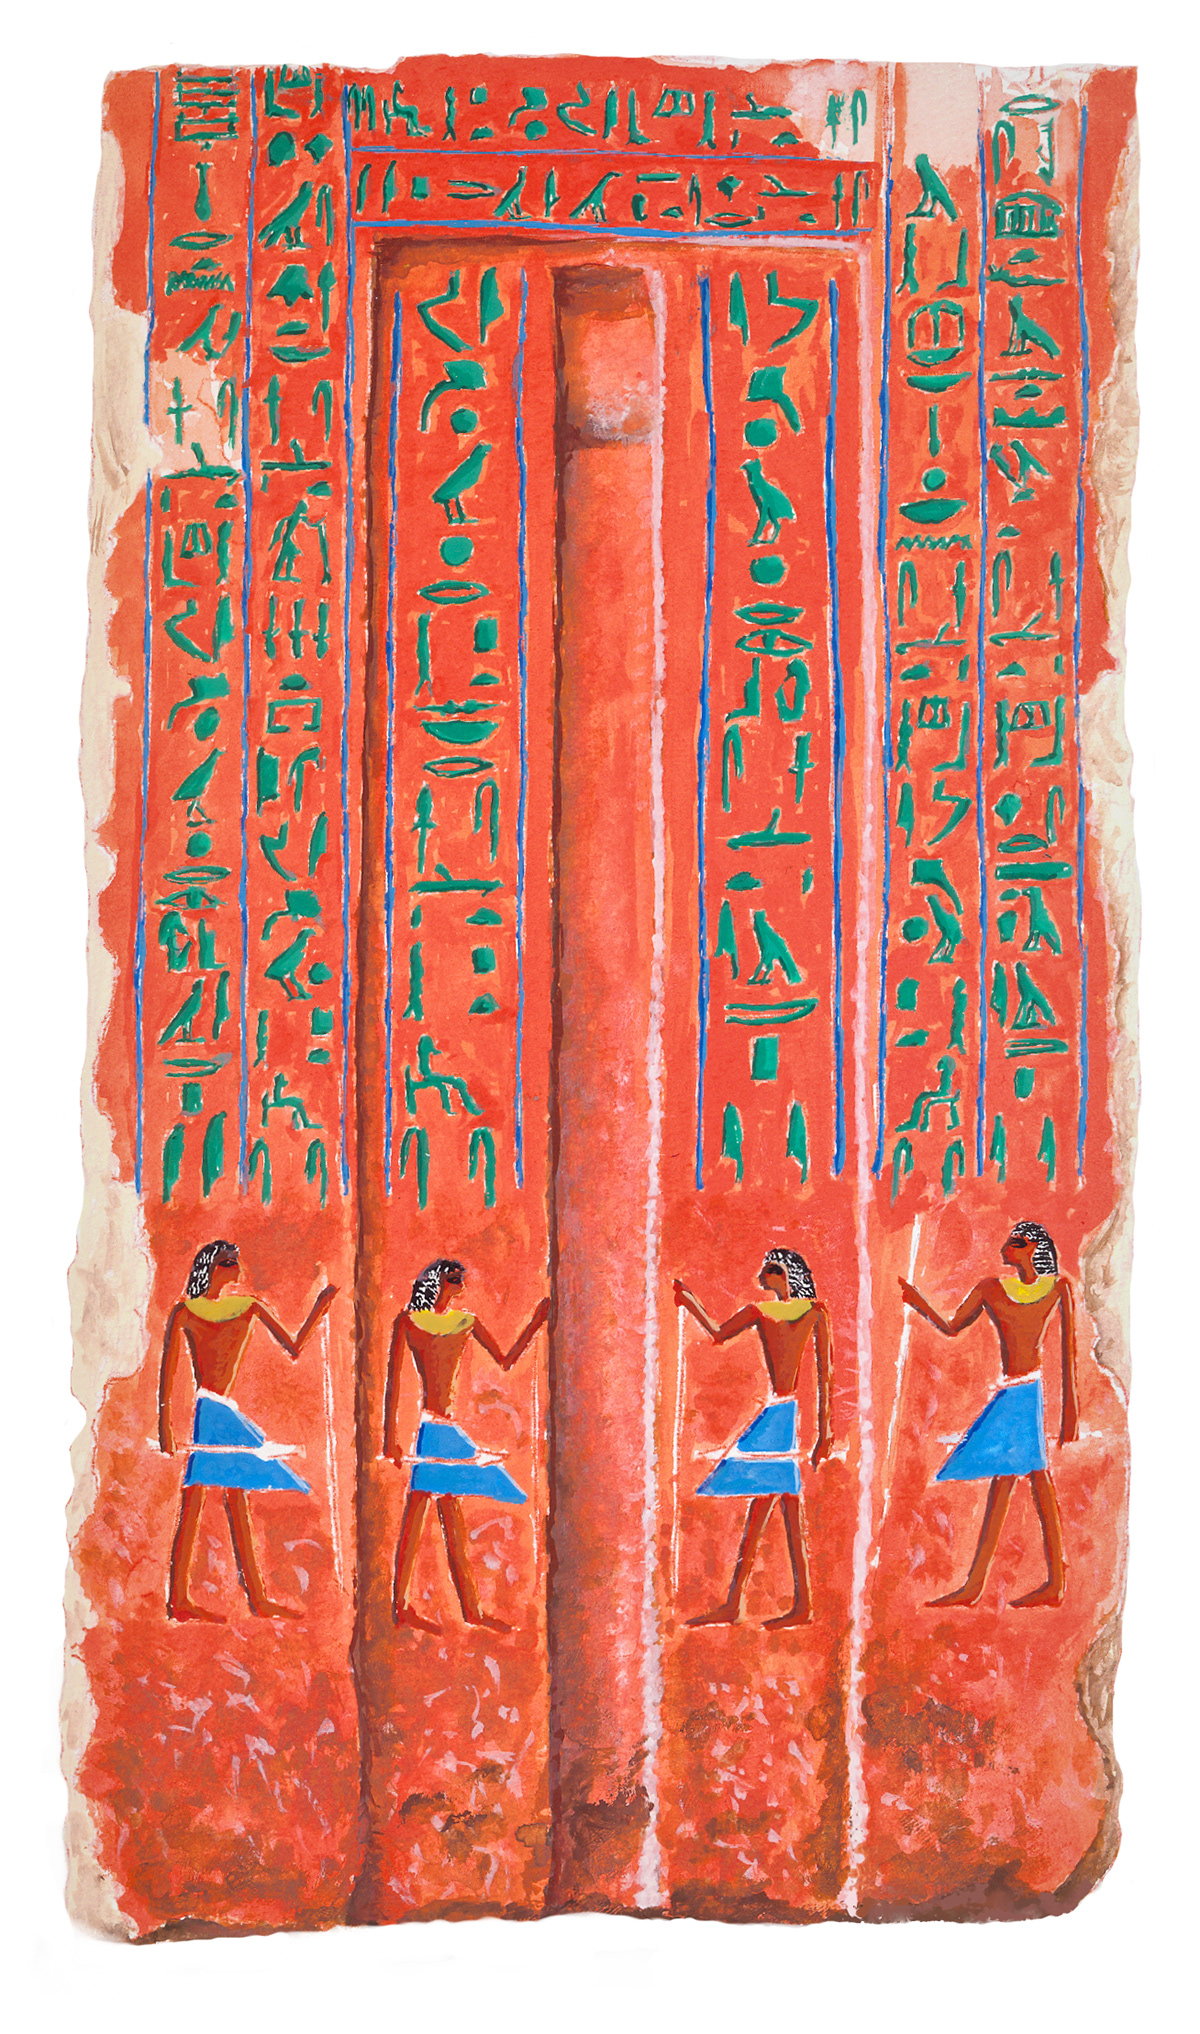 archaeology heritage scientific illustration gouache digital painting egyptian art Egyptology coffin